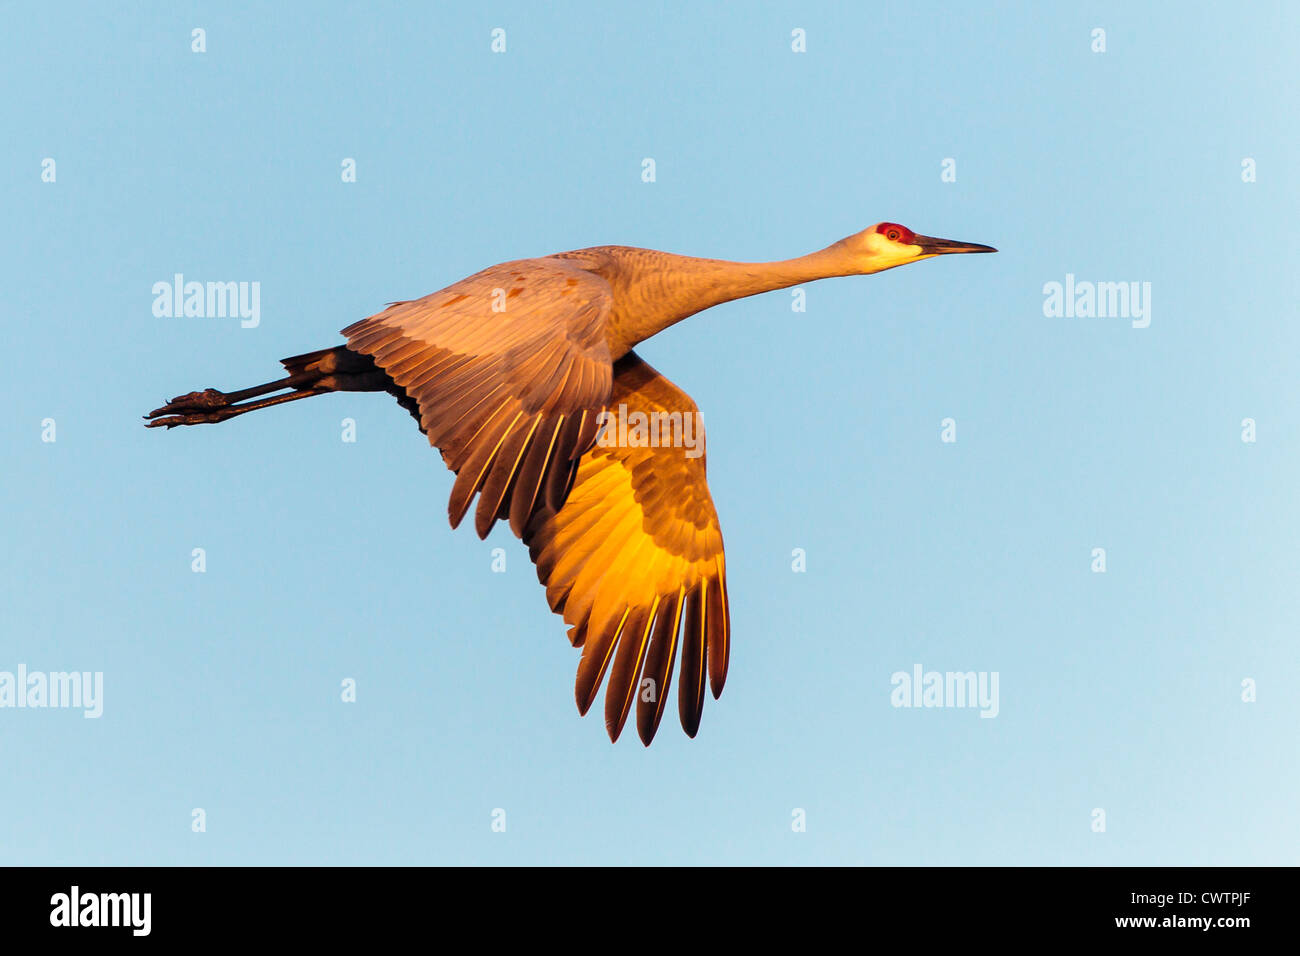 Sandhill crane in flight Stock Photo